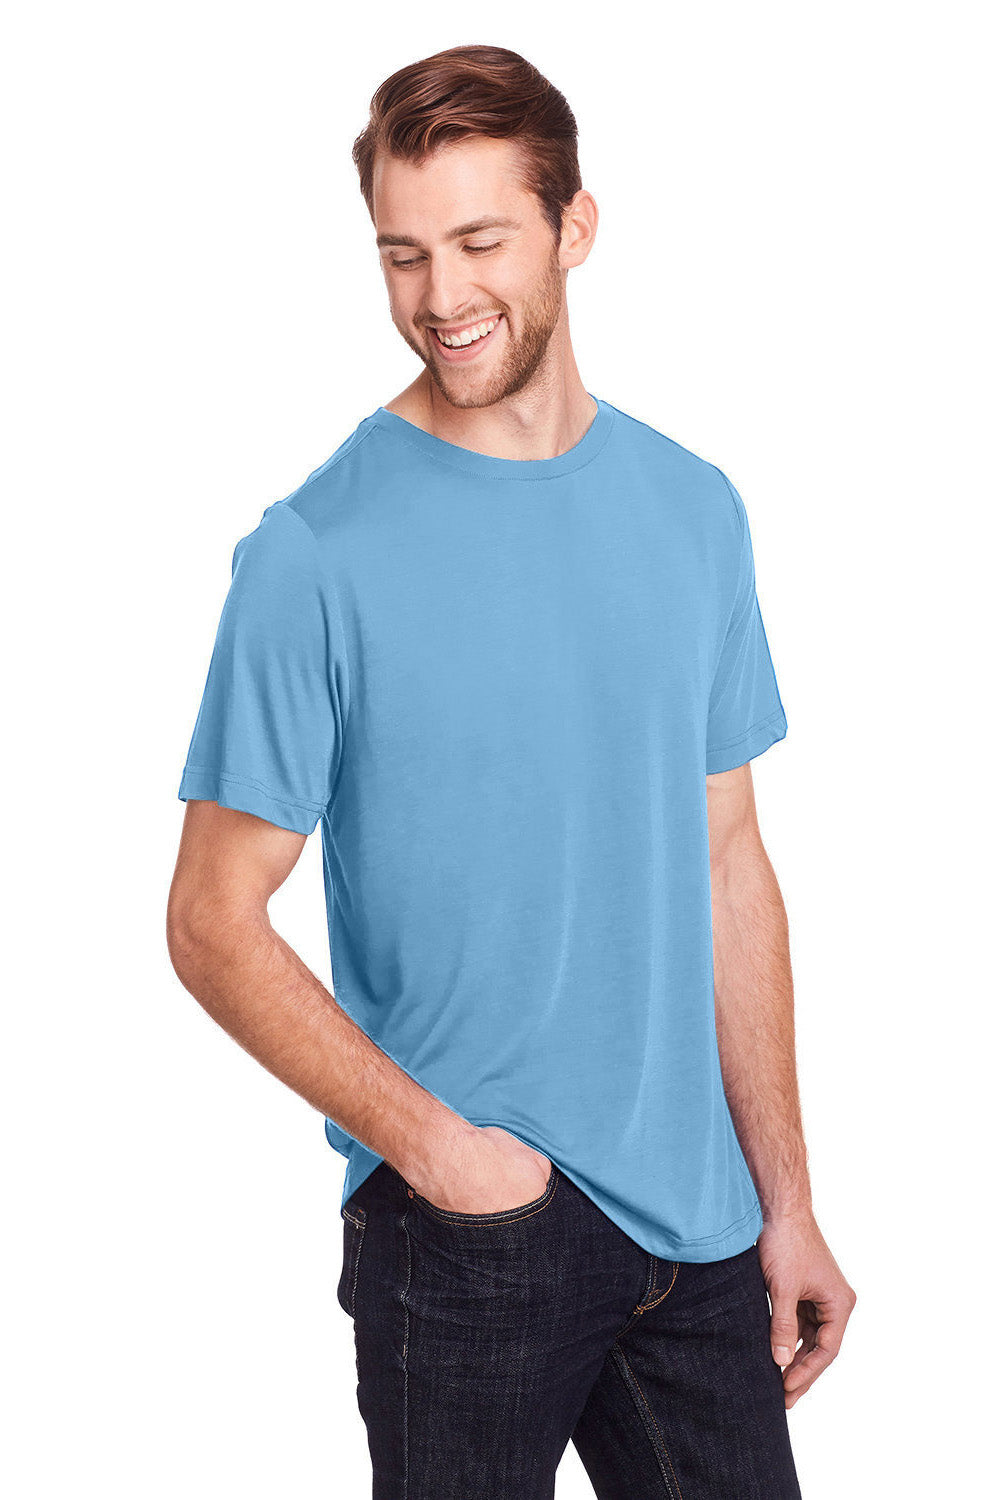 Core 365 CE111 Mens Fusion ChromaSoft Performance Moisture Wicking Short Sleeve Crewneck T-Shirt Columbia Blue 3Q